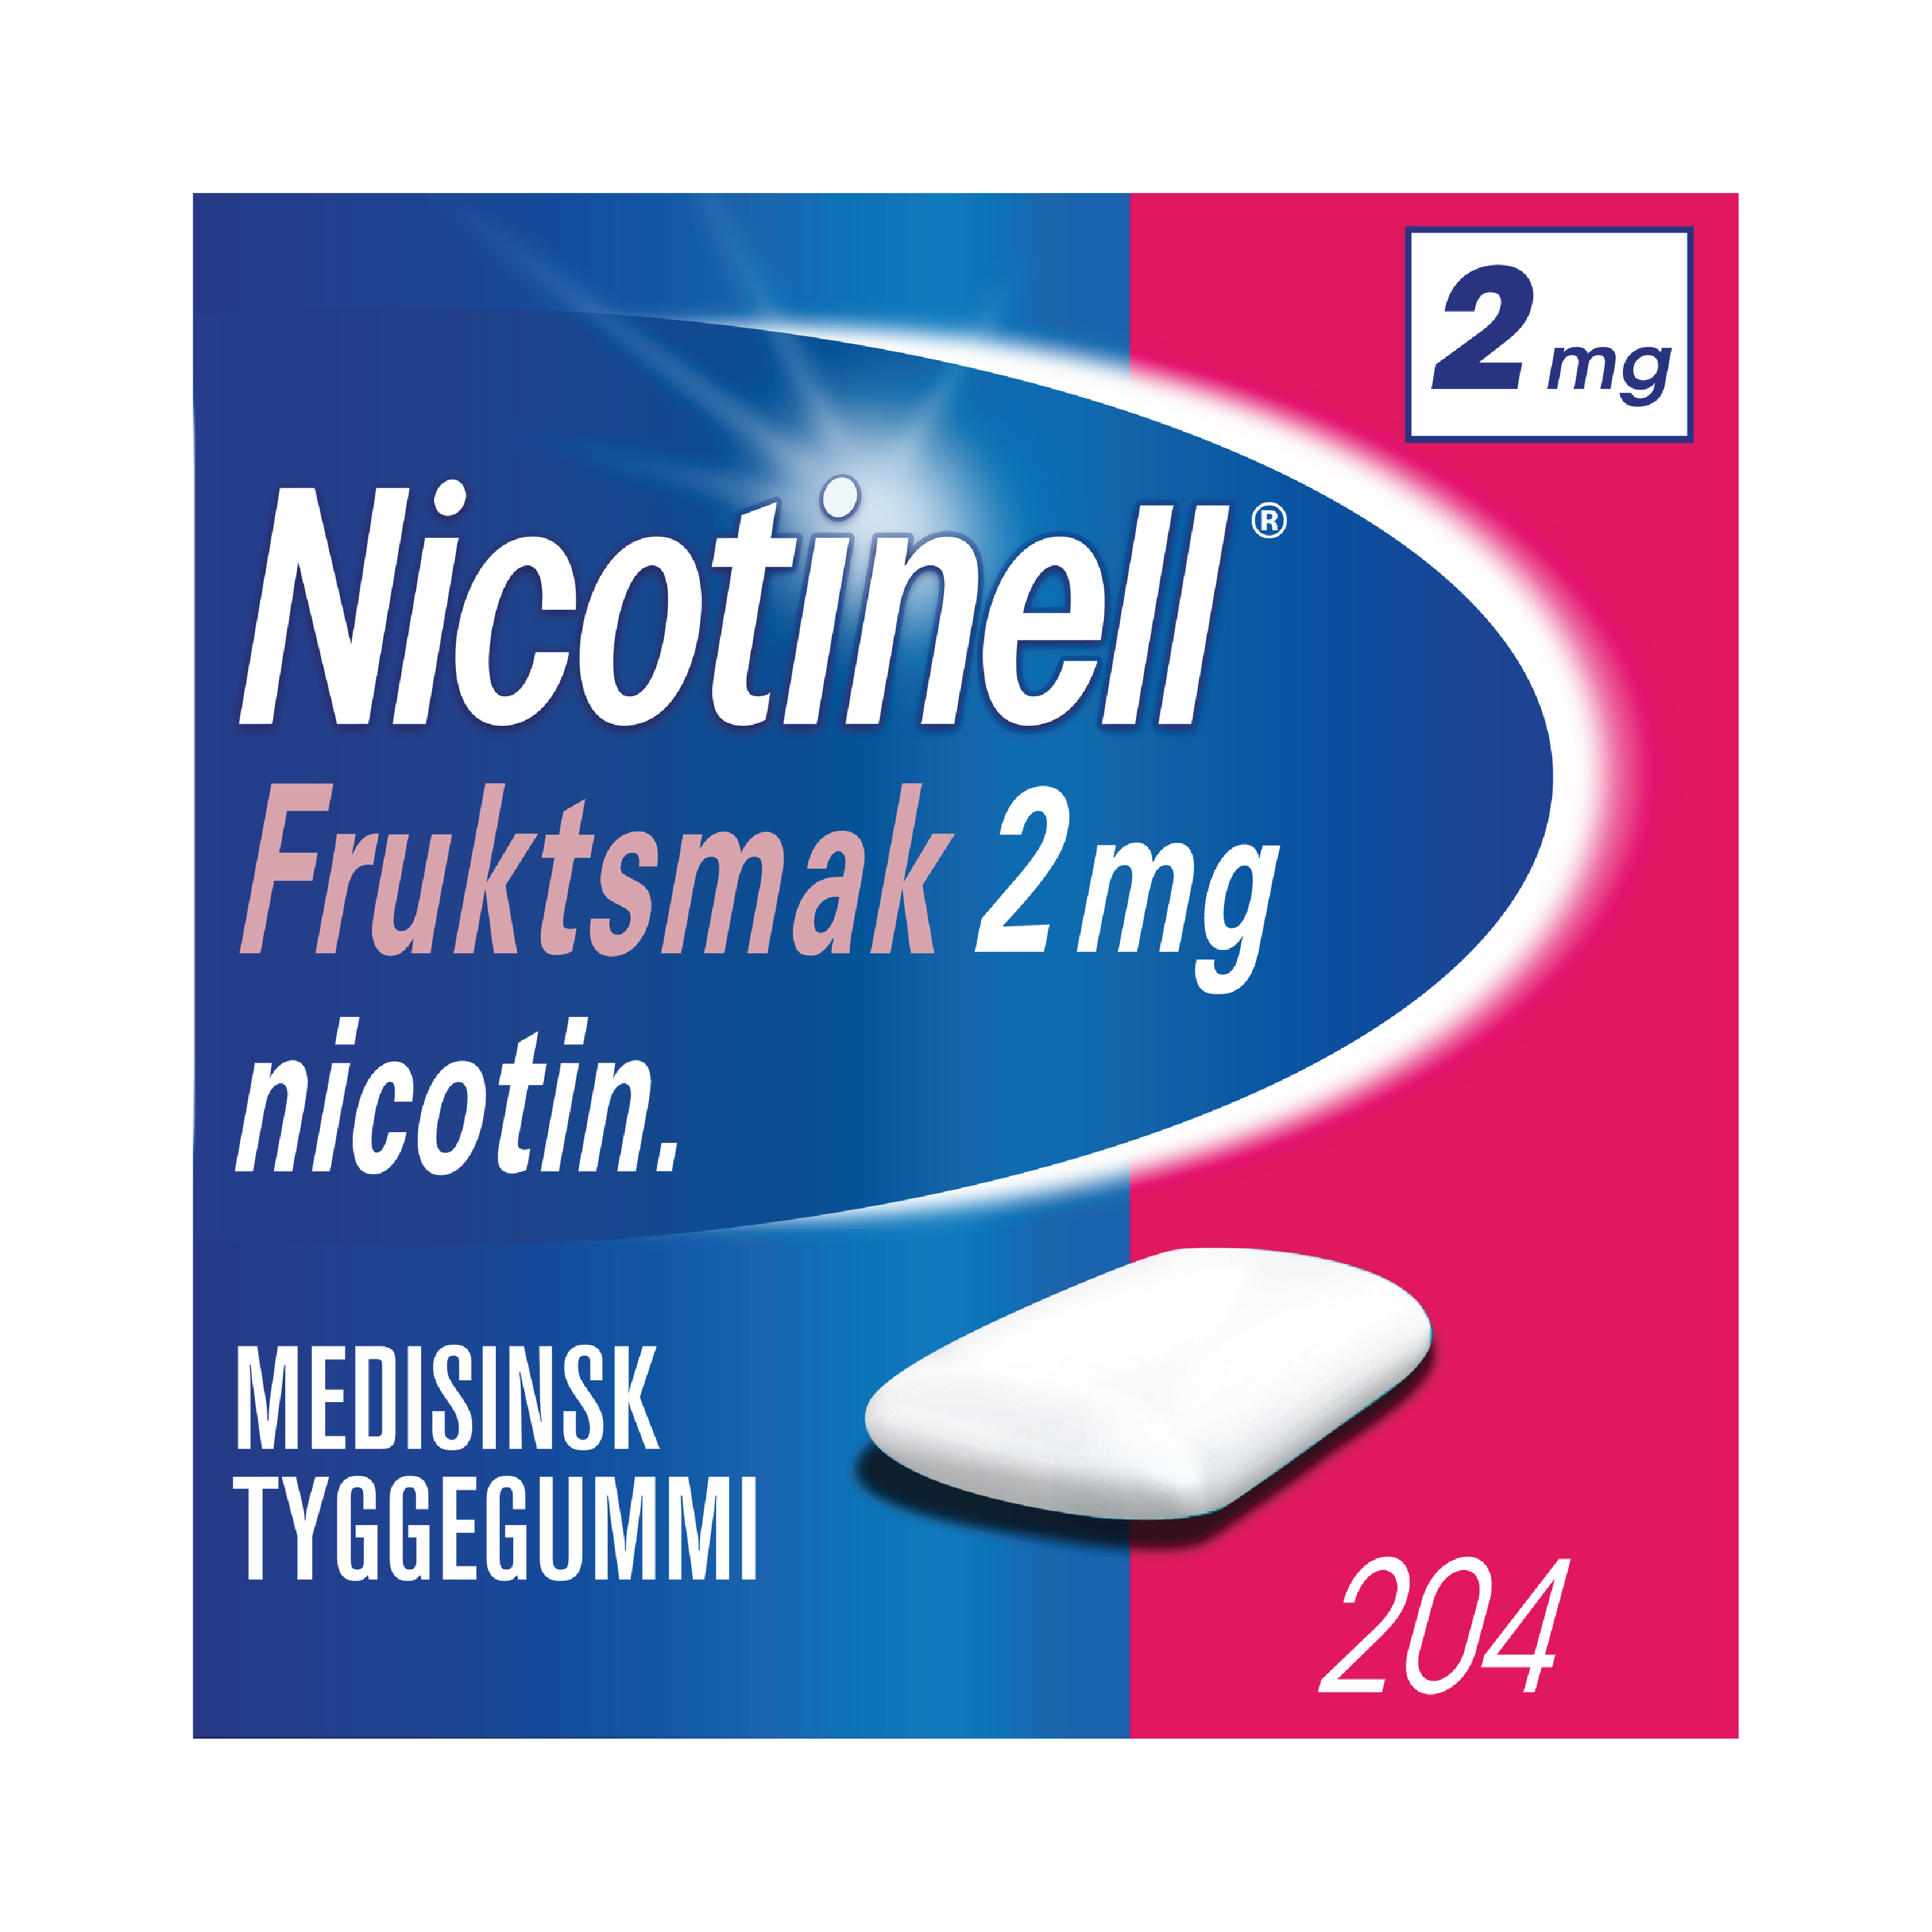 Nicotinell Tyggegummi 2mg fruktsmak, 204 stk.